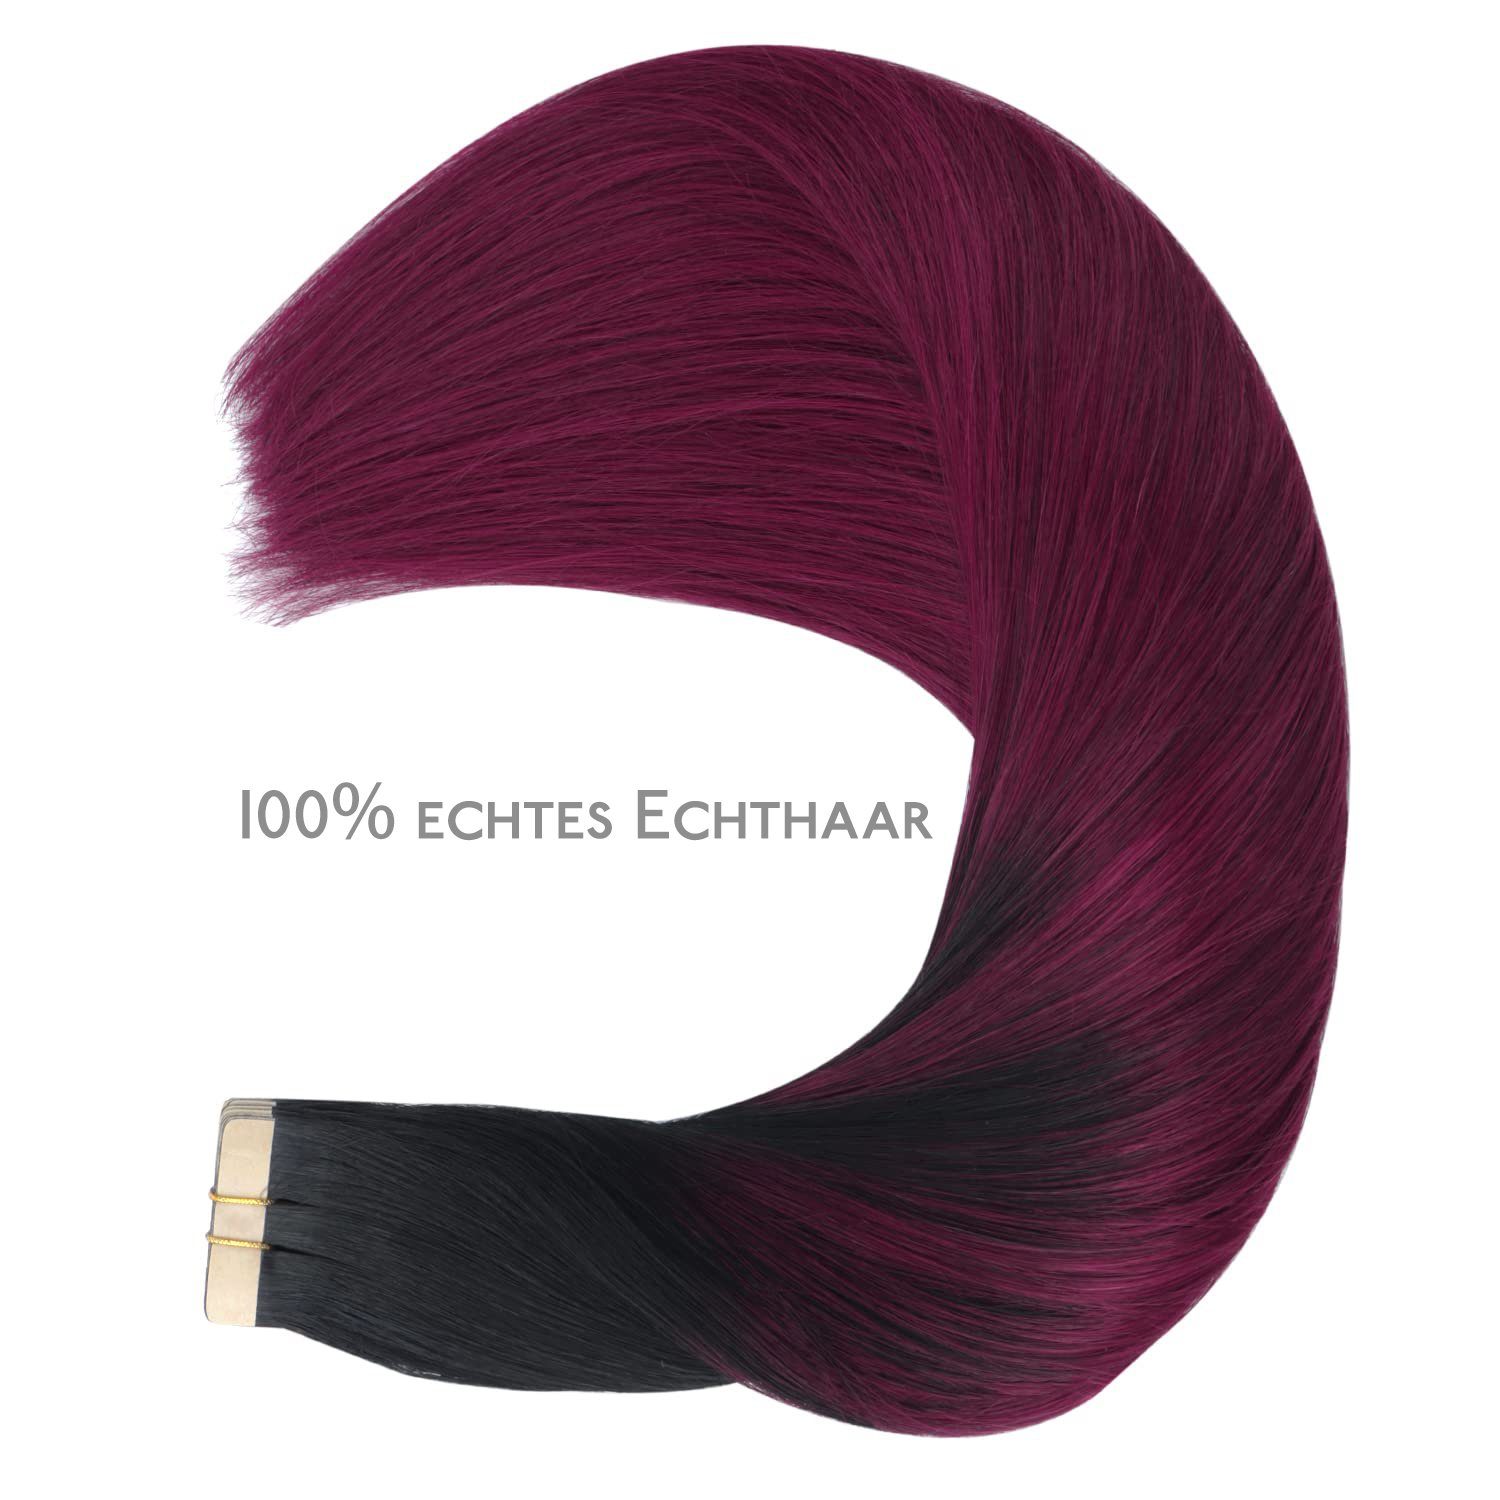 Echthaar-Extension Haar,tiefschwarz burgunderrot im Echthaar-Extensions,Klebeband Wennalife bis